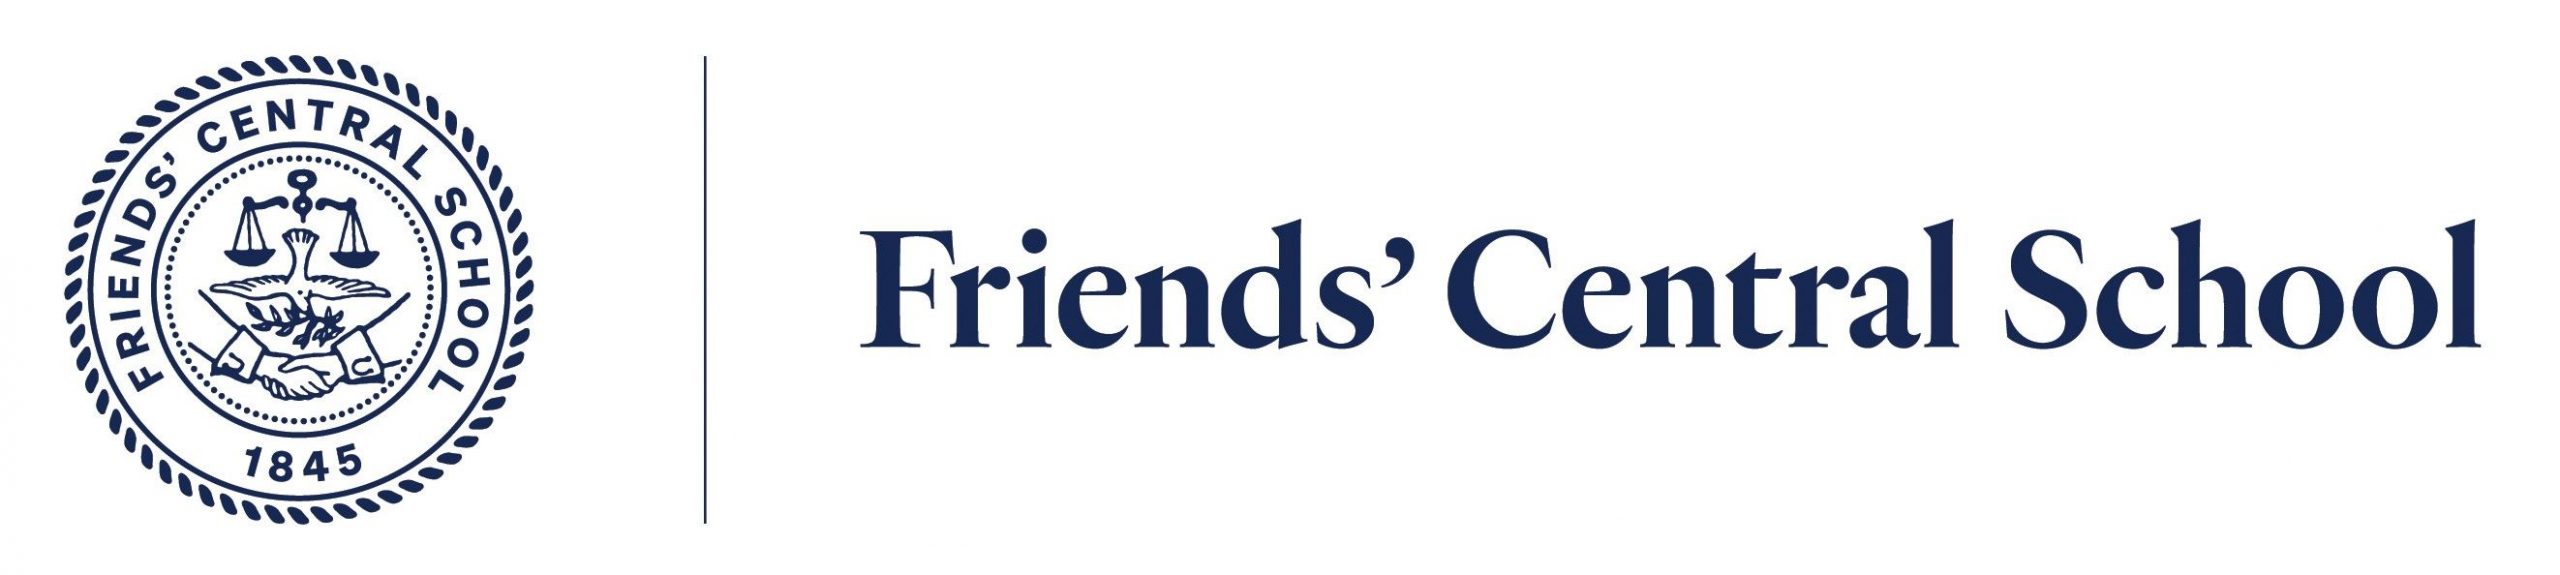 Friends' Central School